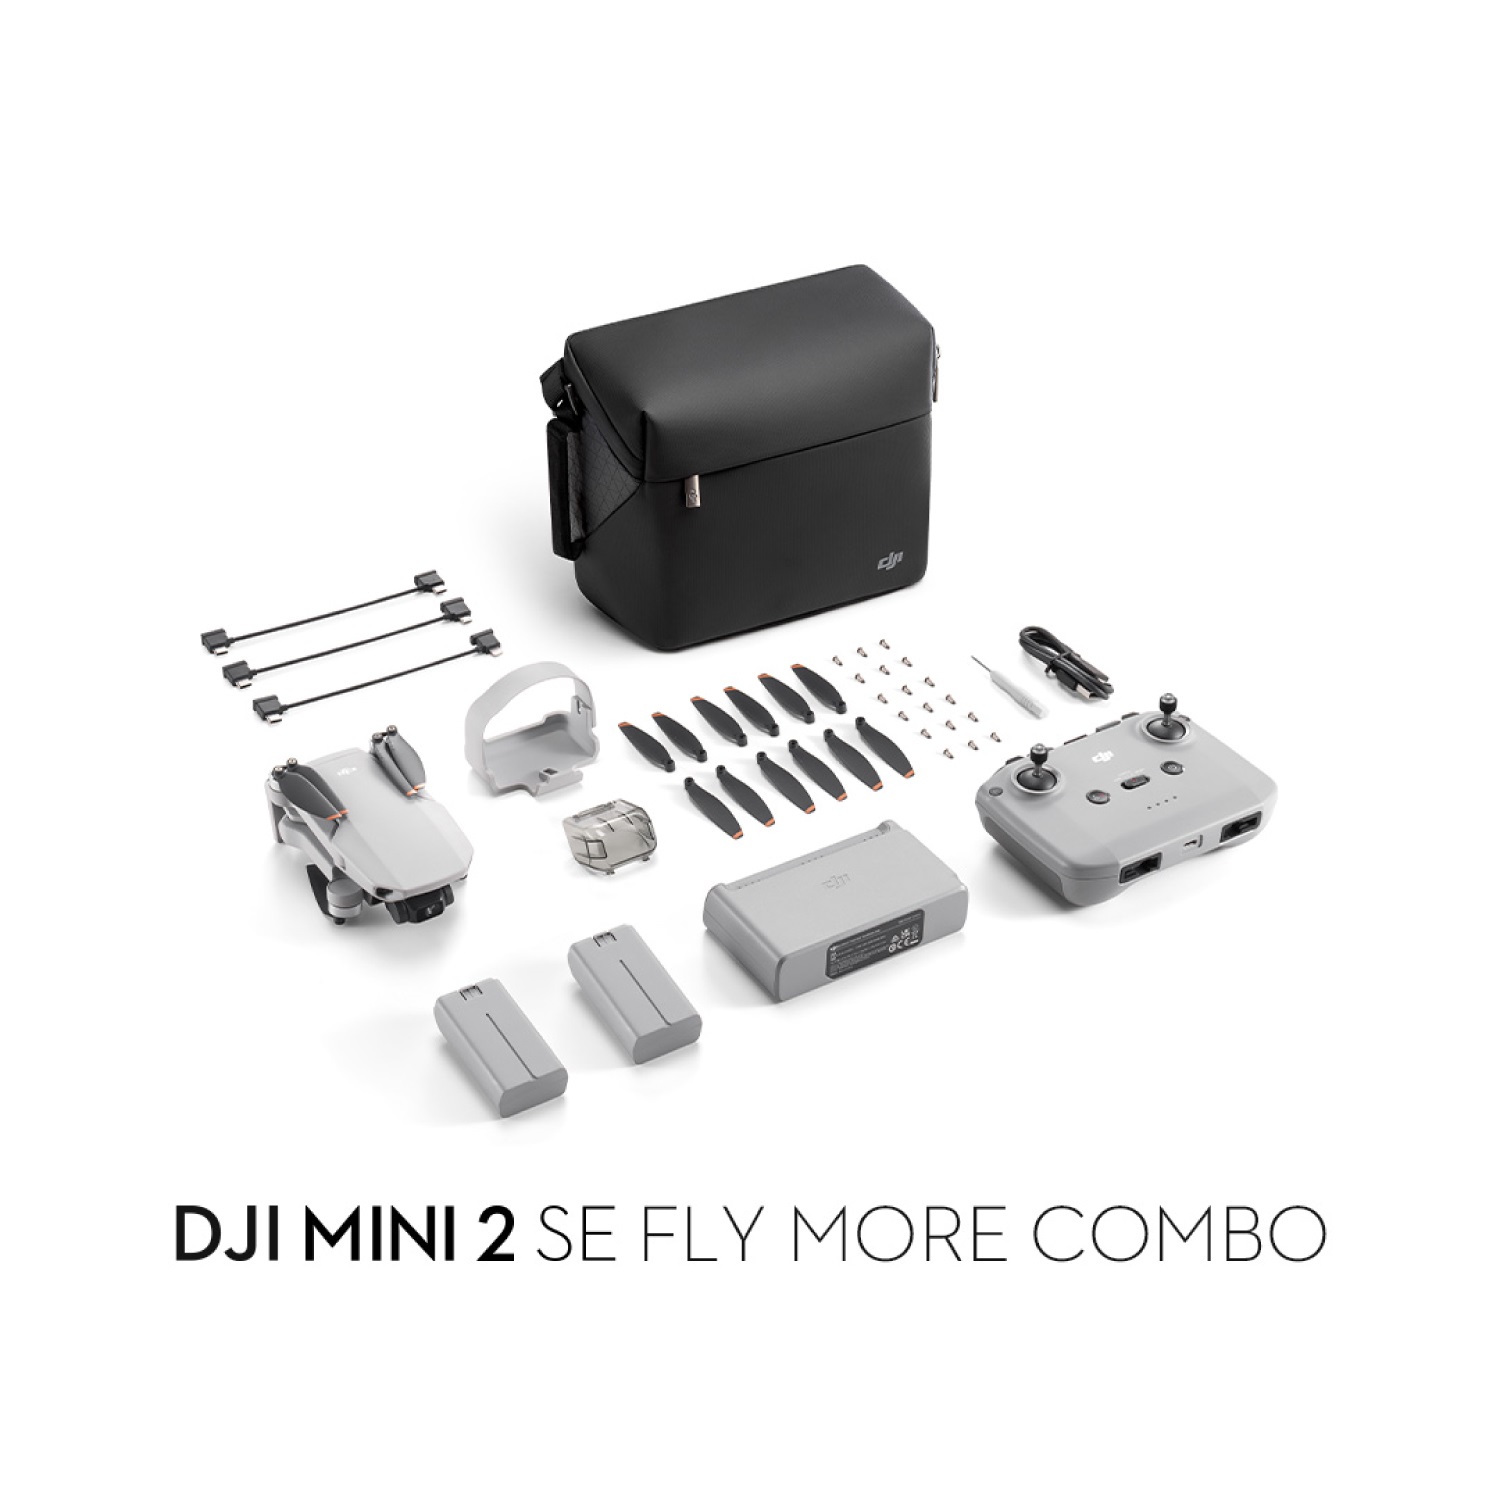 DJI Mini 2 SE Fly More Combo, , large image number 4